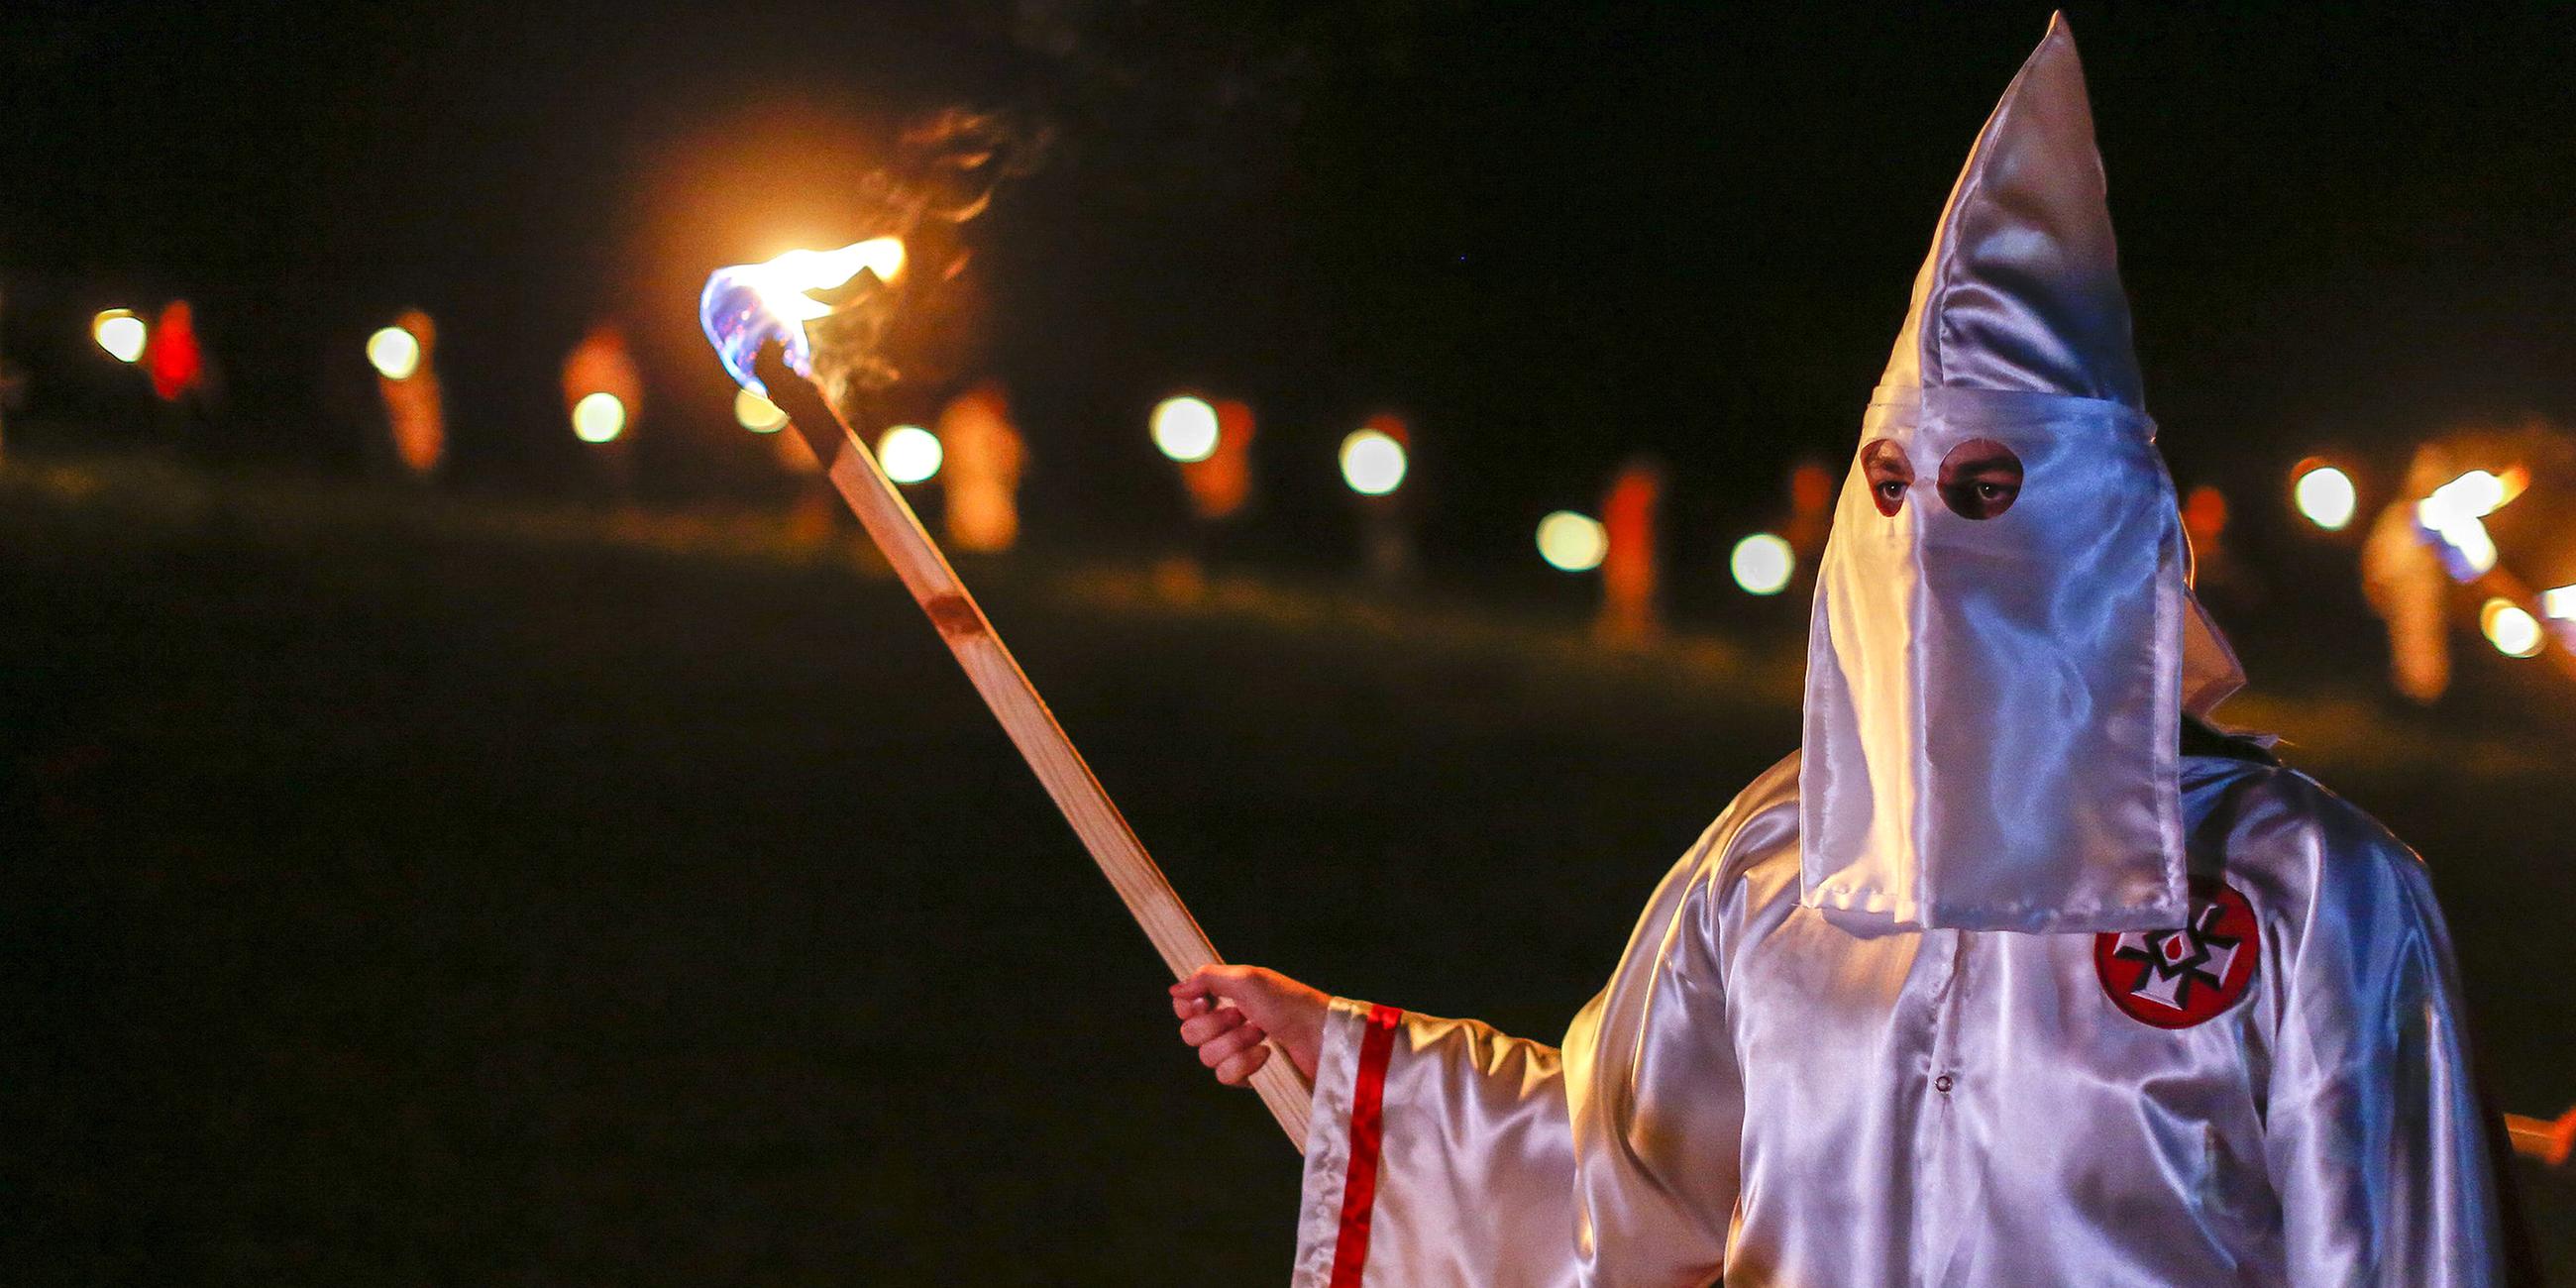 Mitglied des Ku Klux Klan mit brennender Fackel